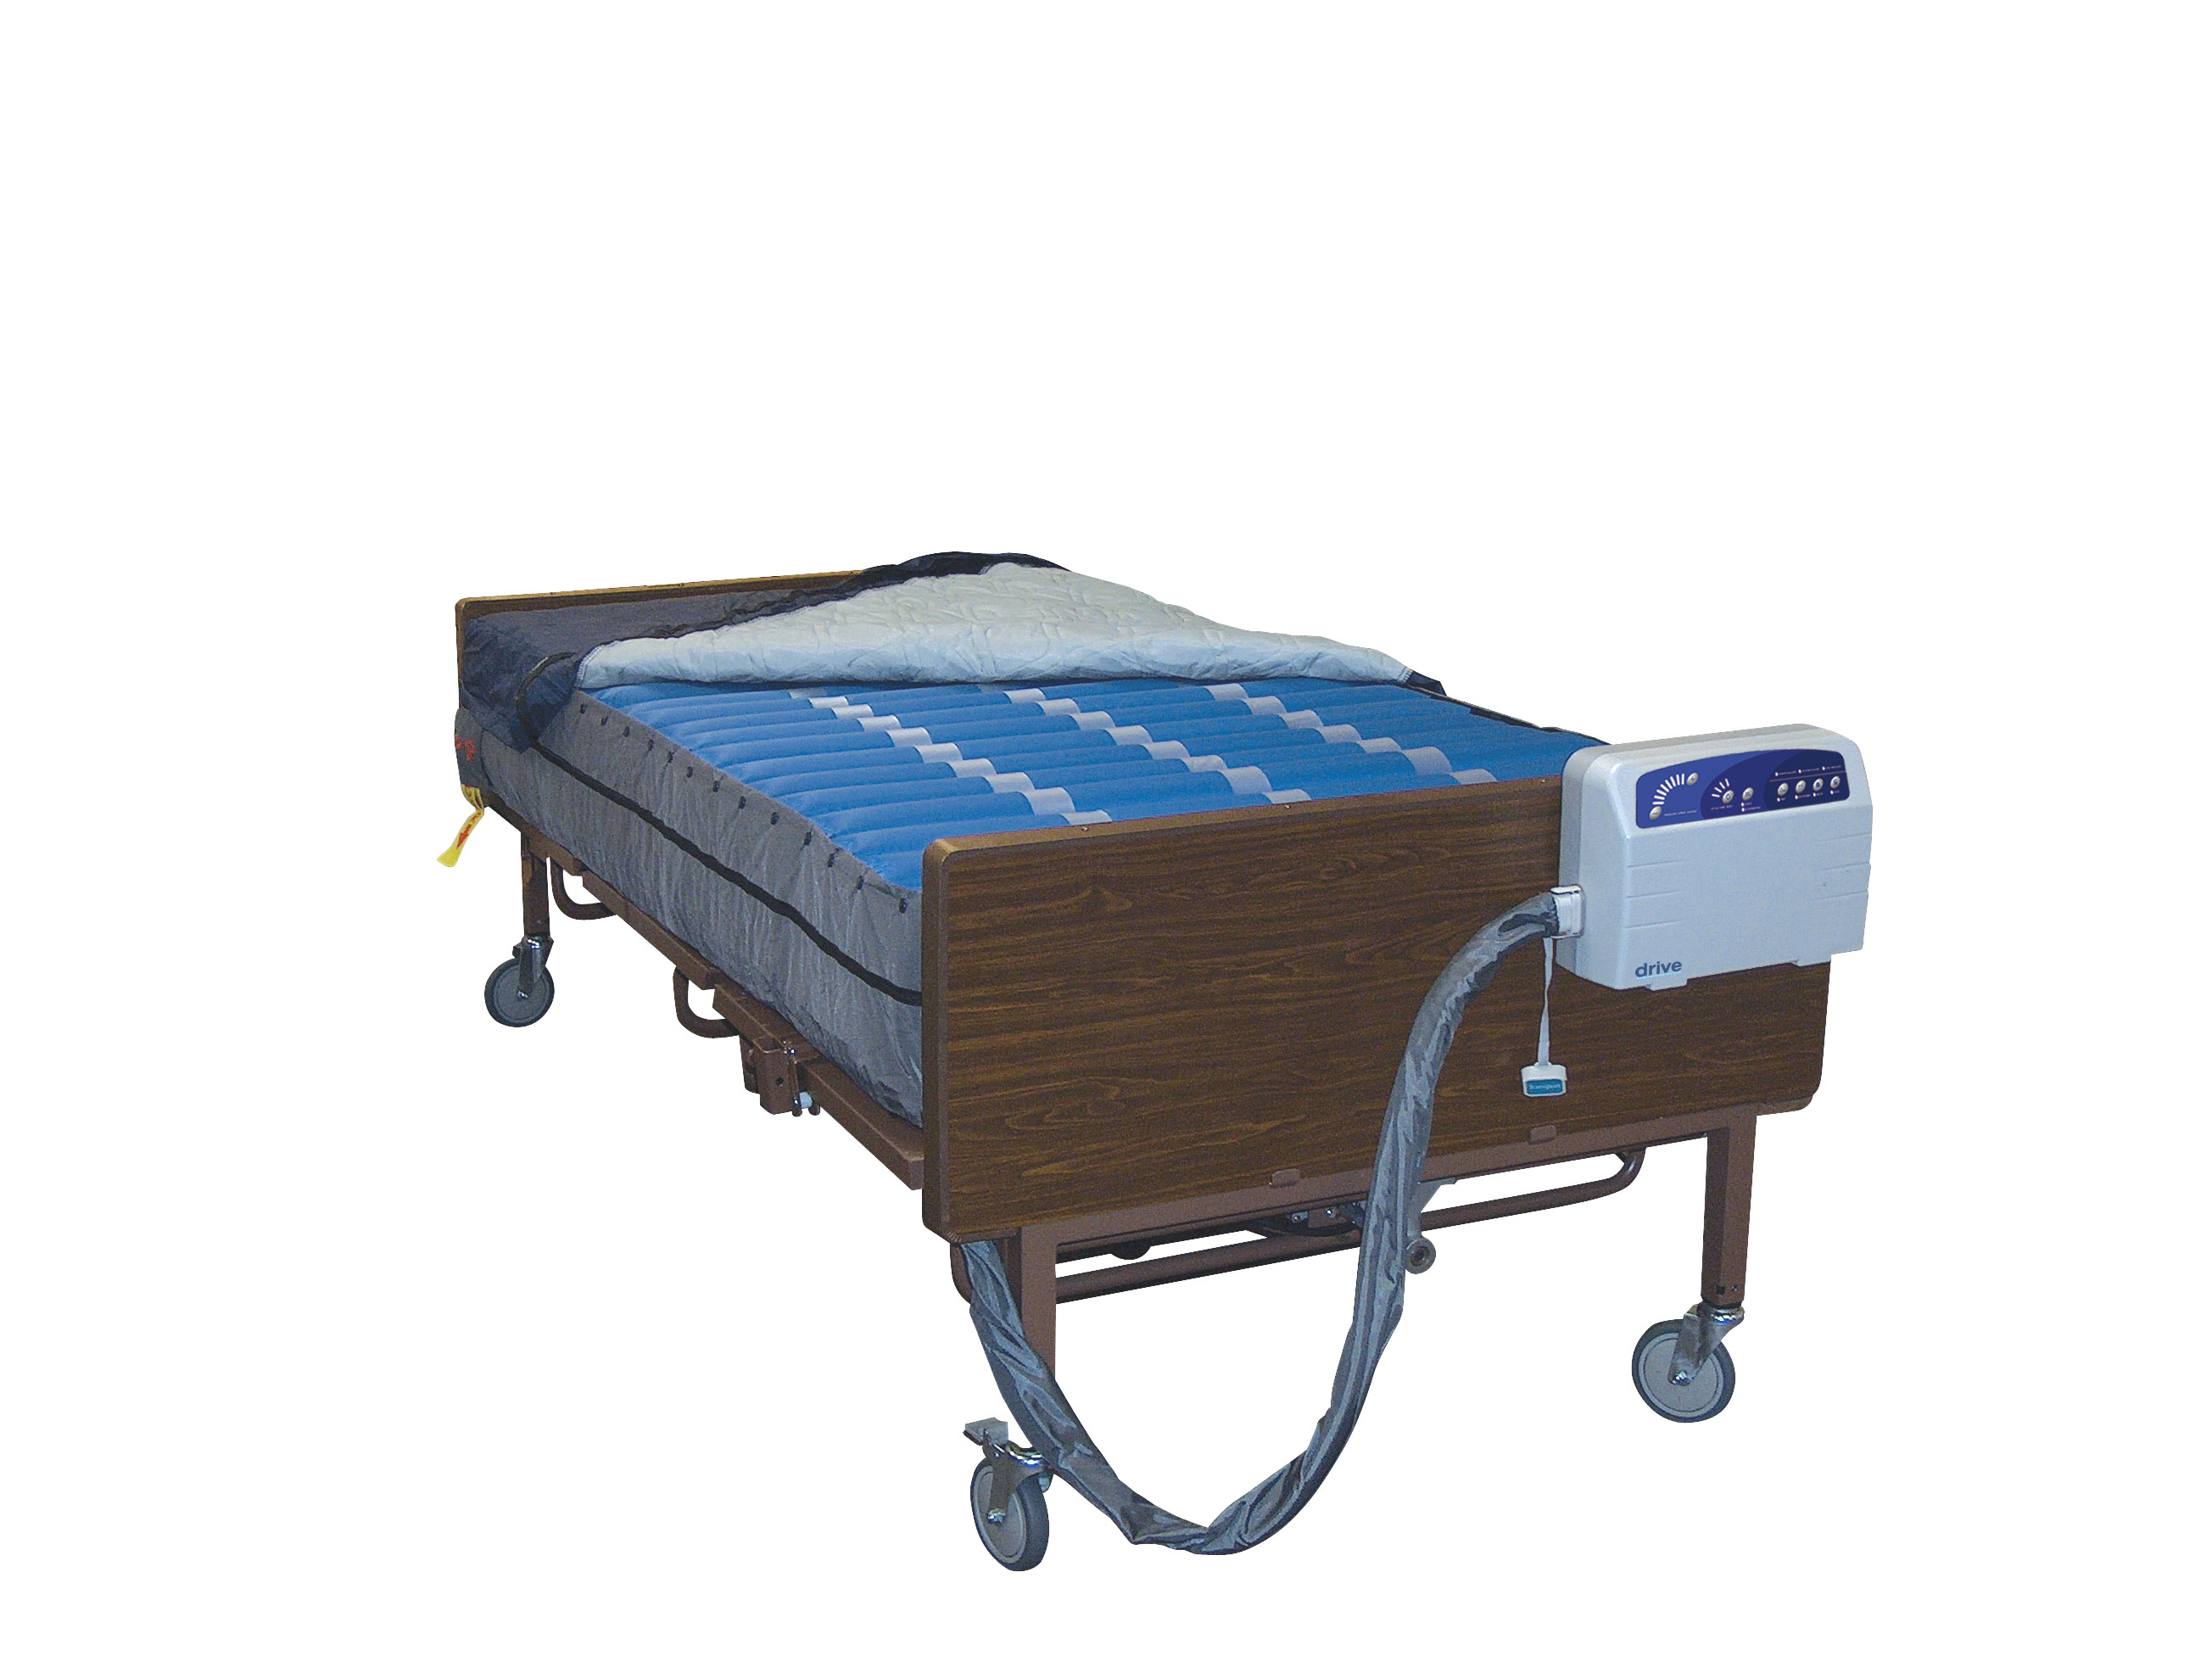 42 inch bariatric mattress